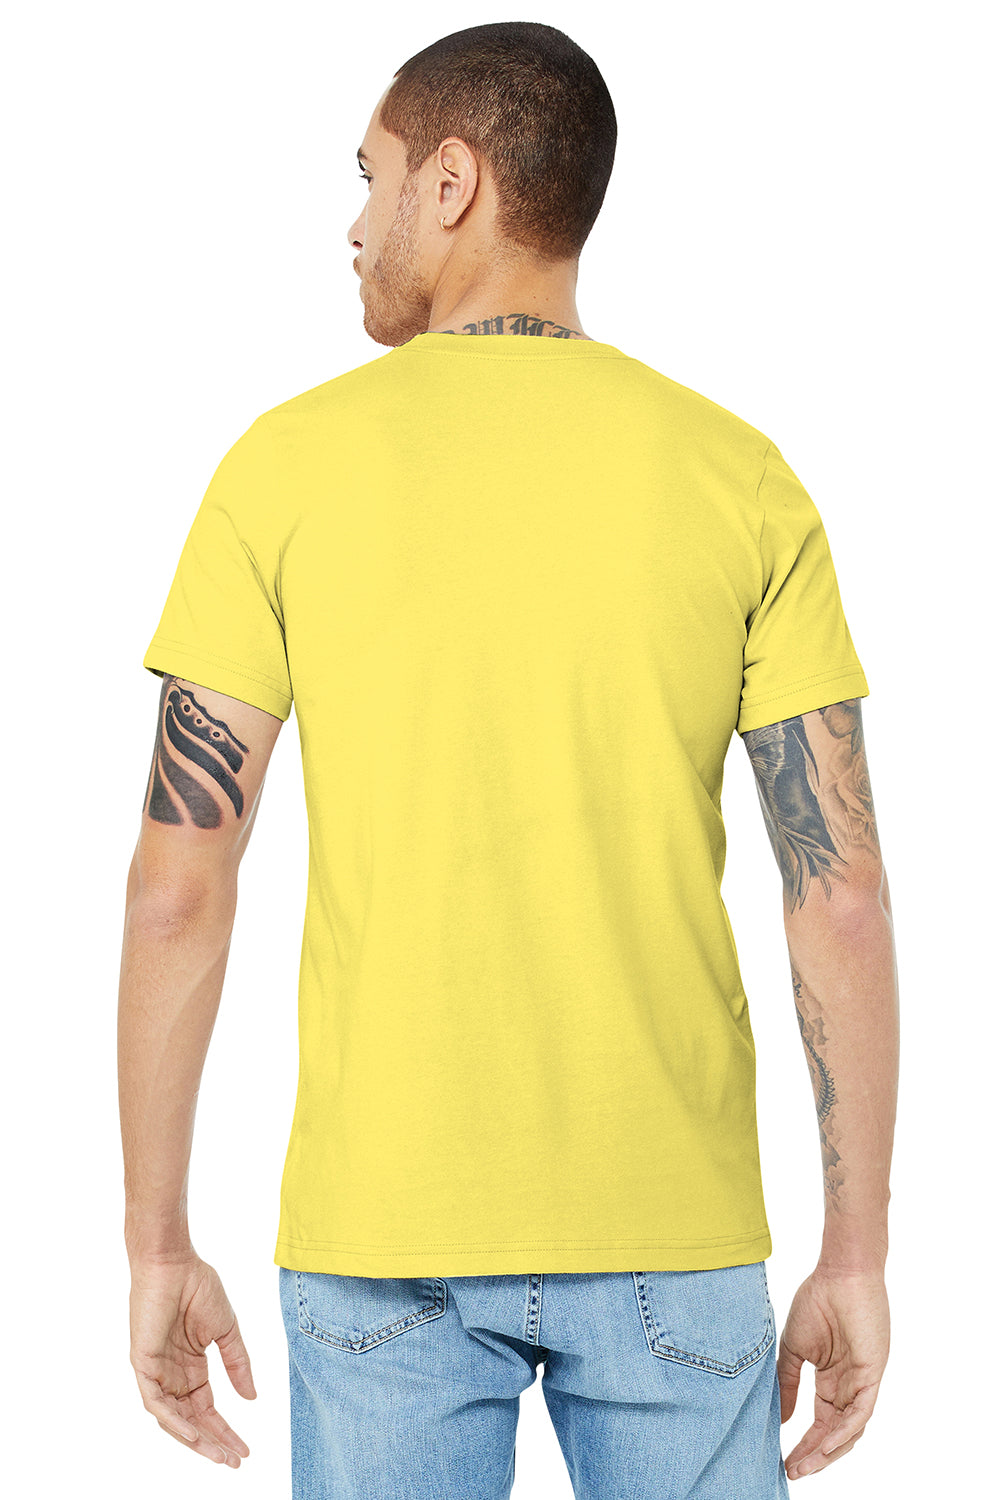 Bella + Canvas BC3001/3001C Mens Jersey Short Sleeve Crewneck T-Shirt Yellow Model Back